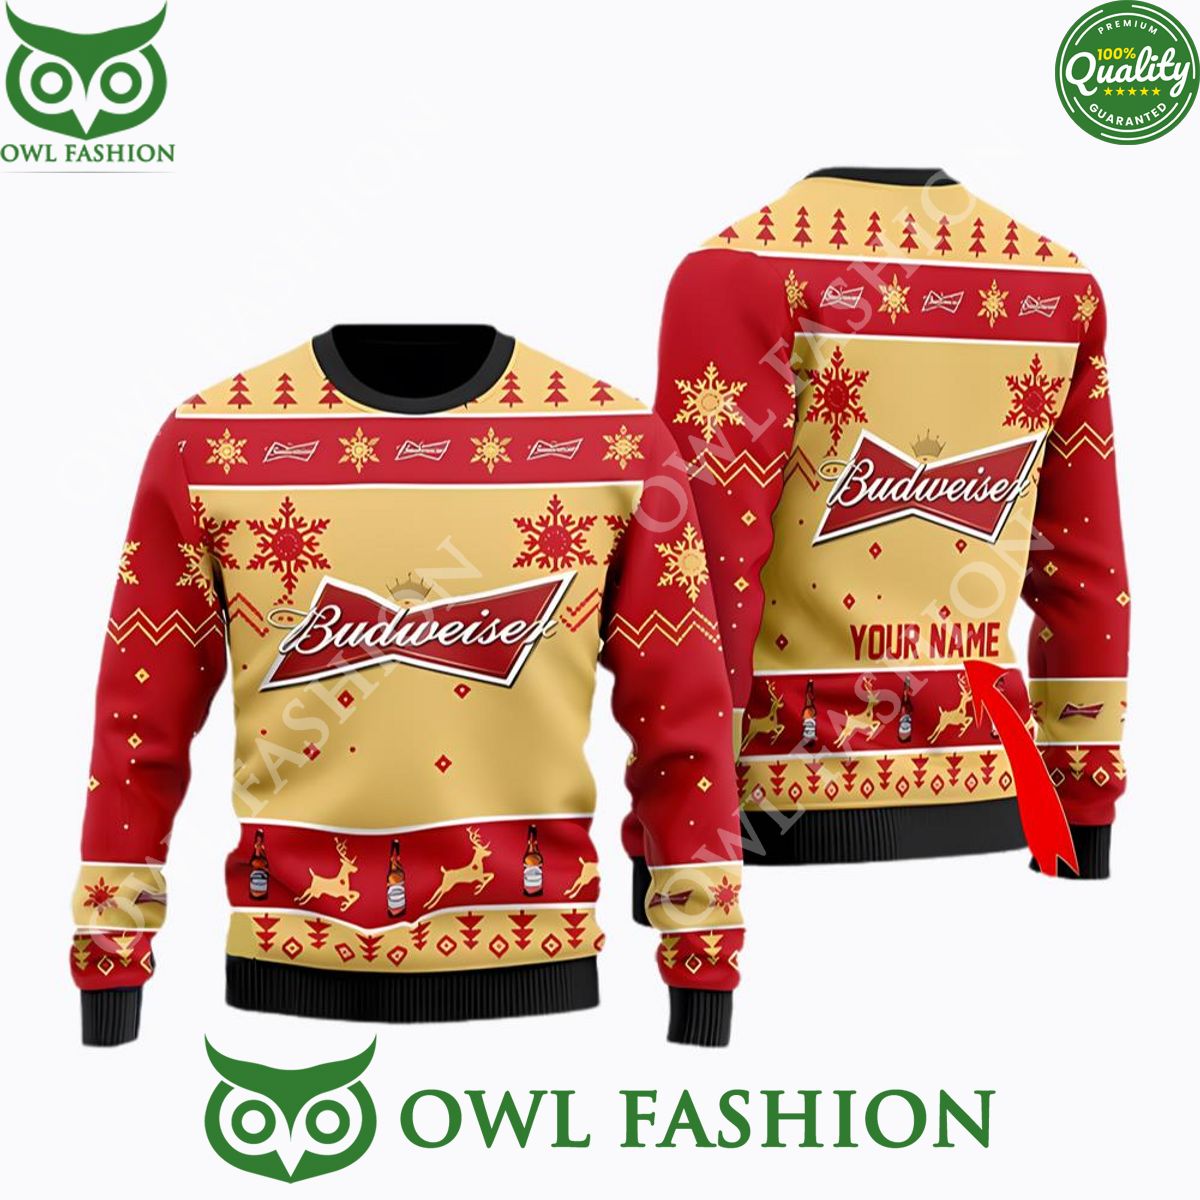 budweiser beer christmas sweater jumper 1 FXBNG.jpg